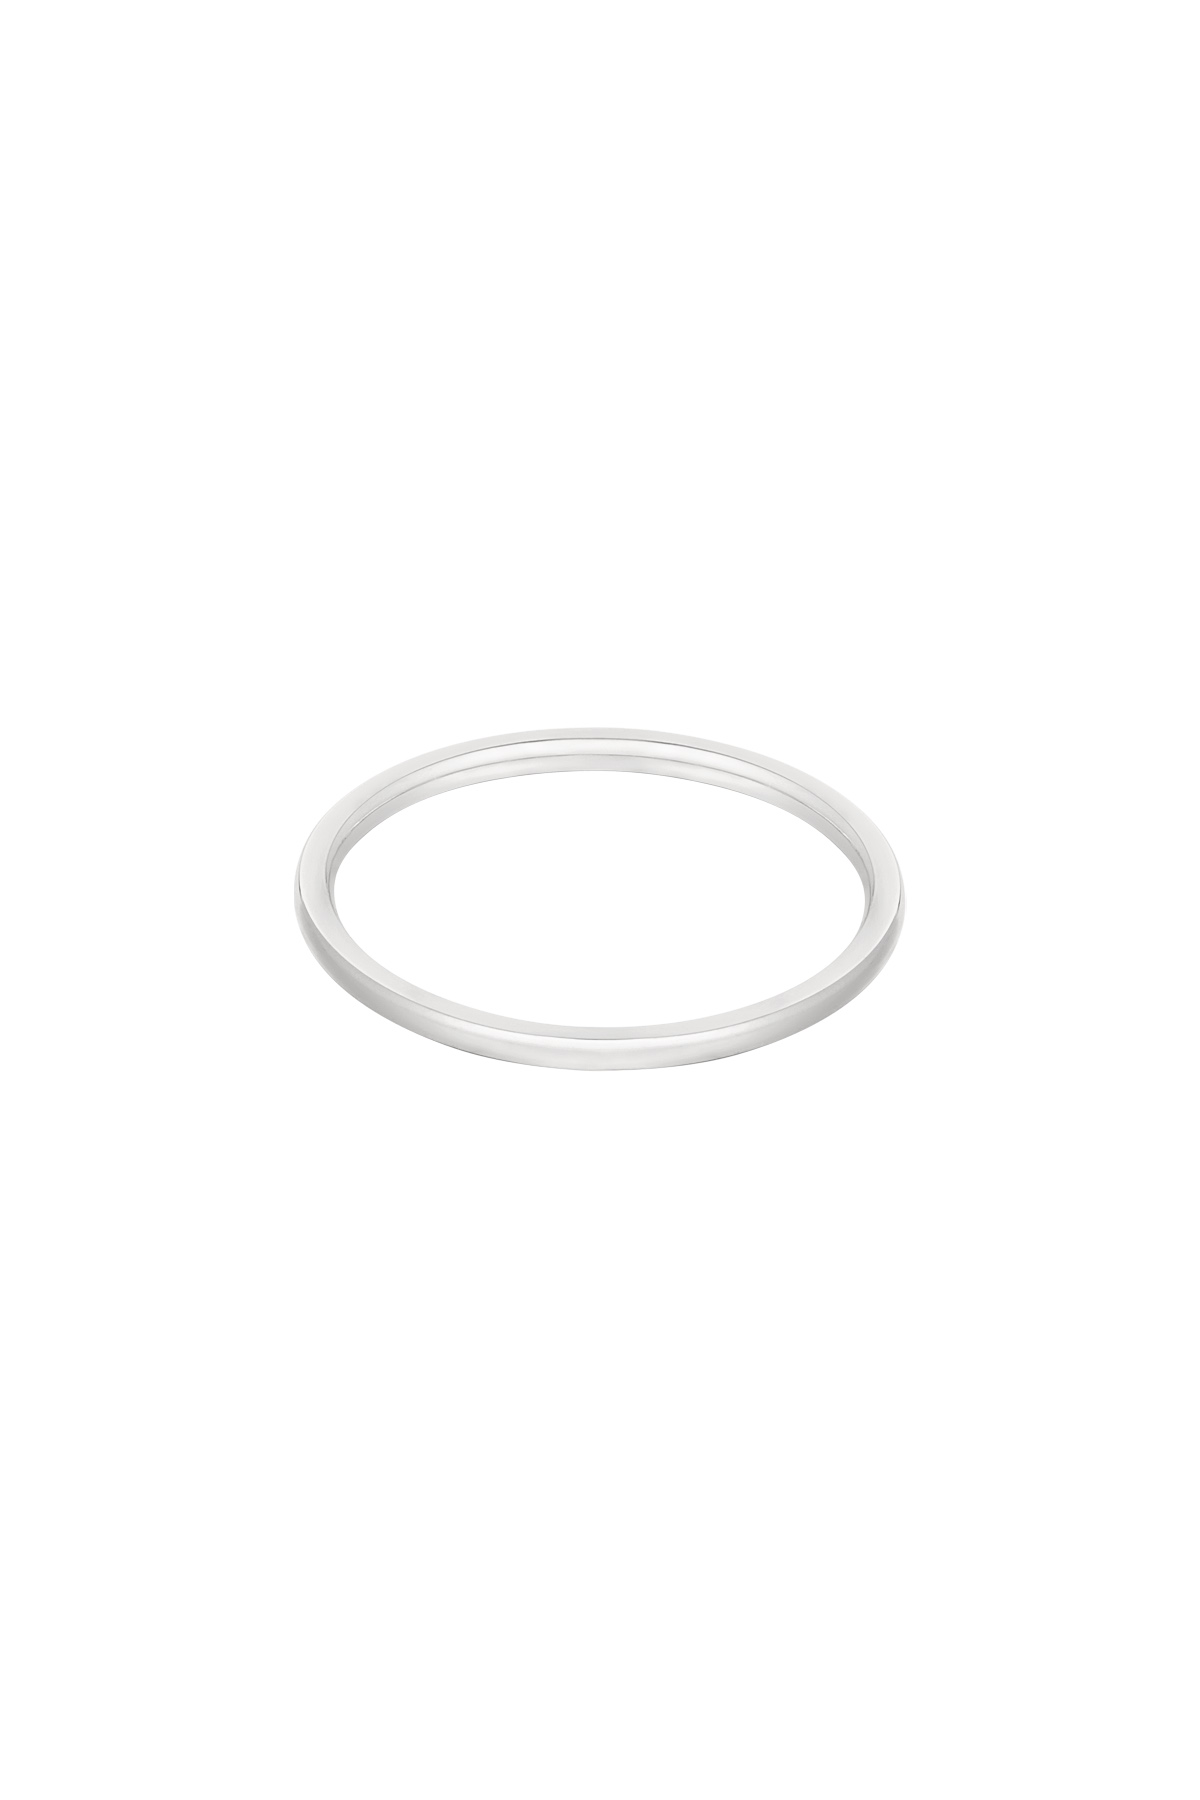 Ring minimalist - silver